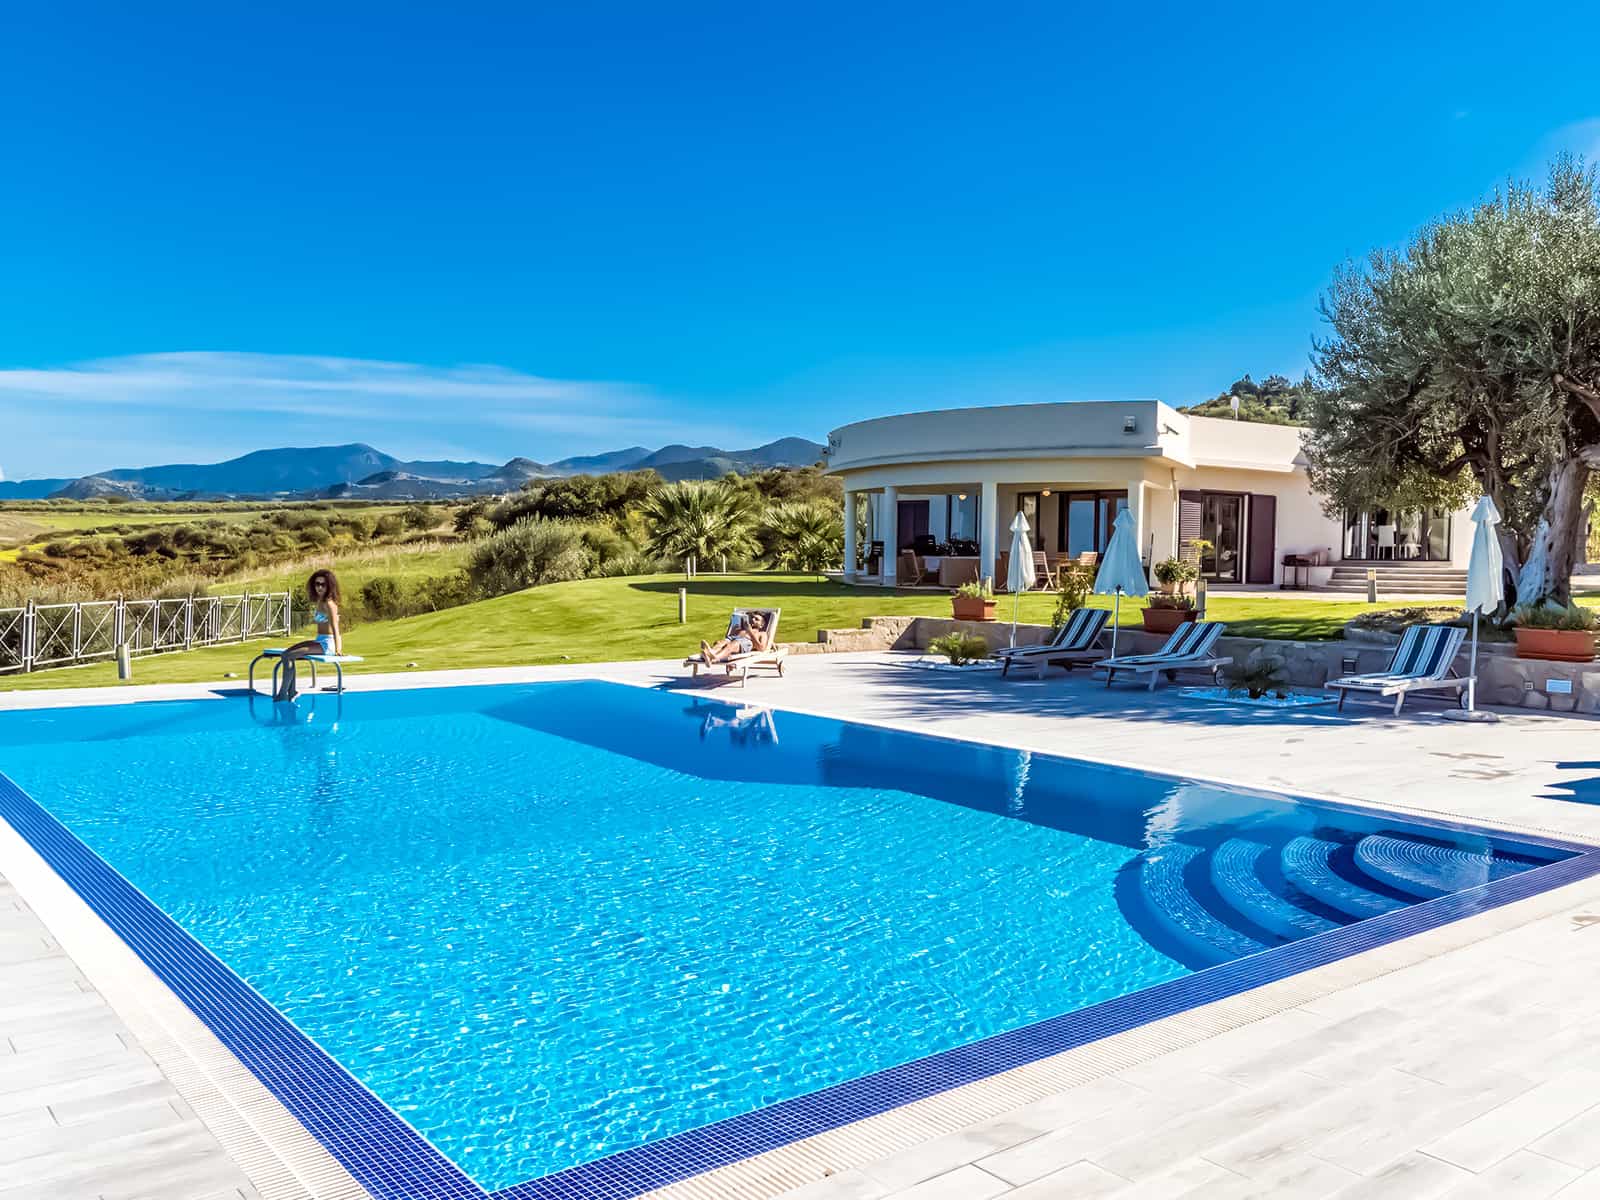 Villa, casa vacanza, appartamento in Sicilia - vacanze al mare